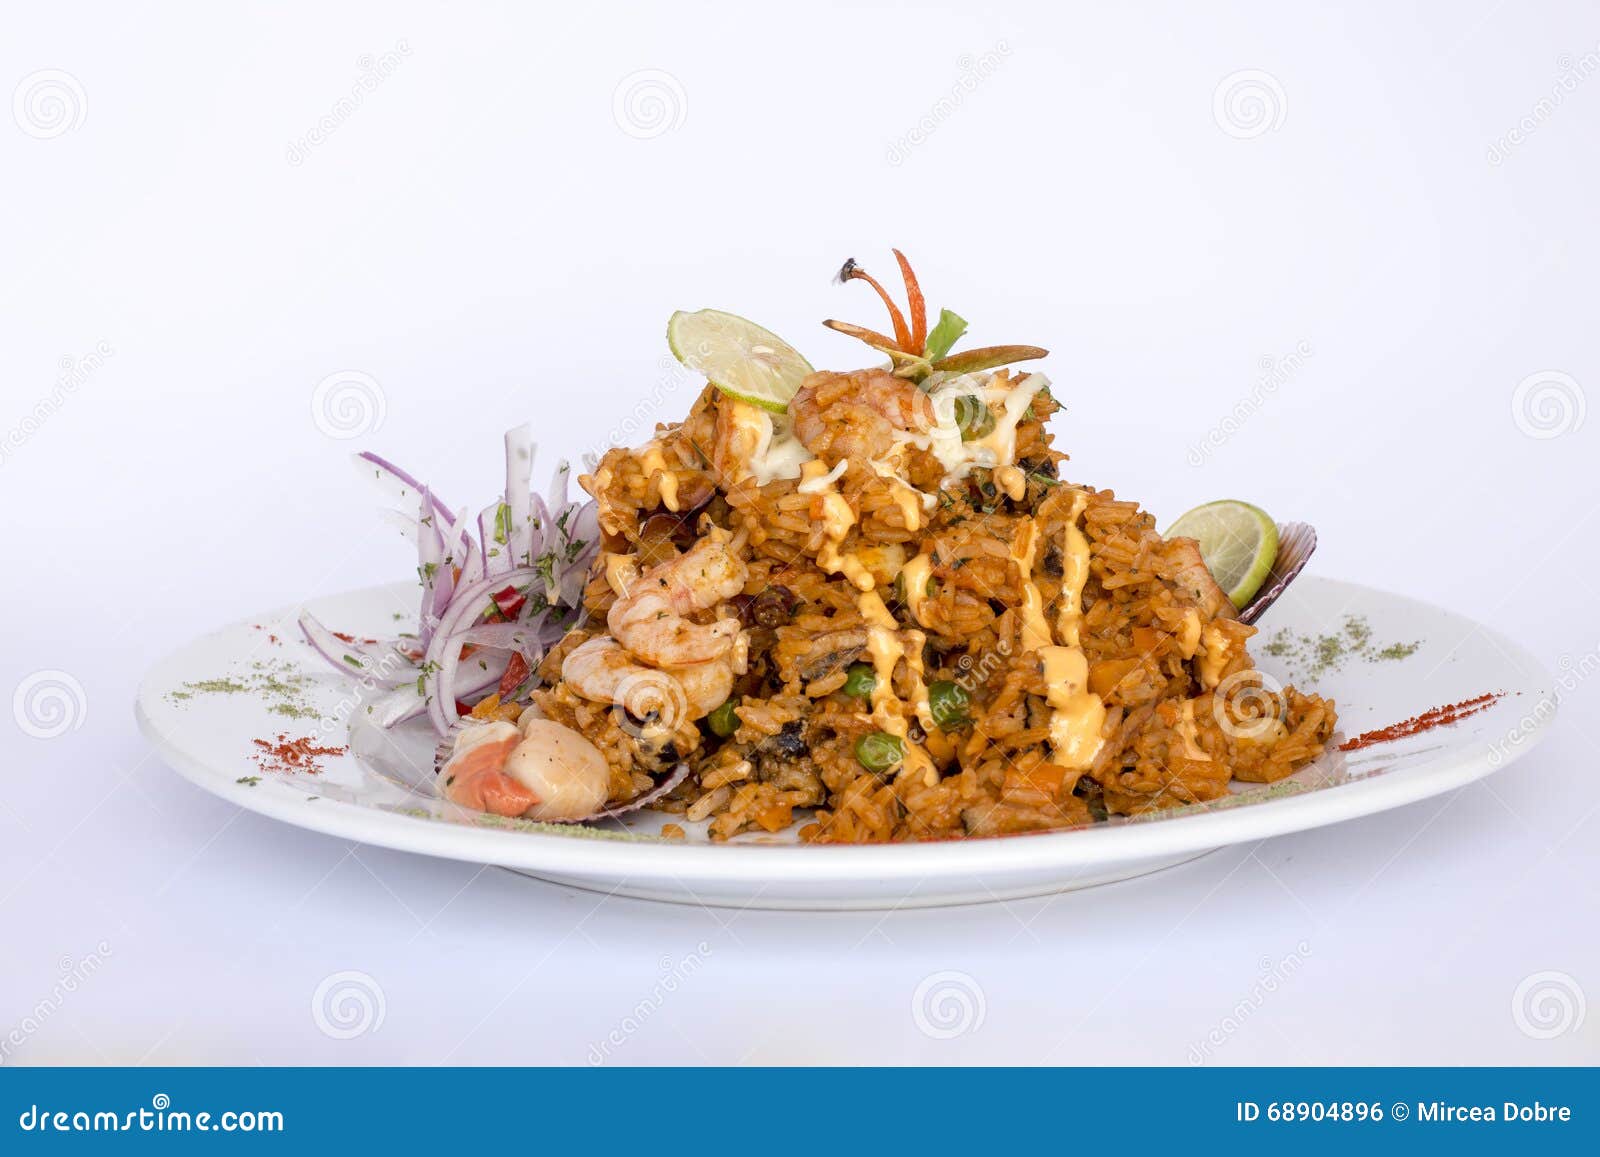 peru dish: rice with seafood (arroz con mariscos).